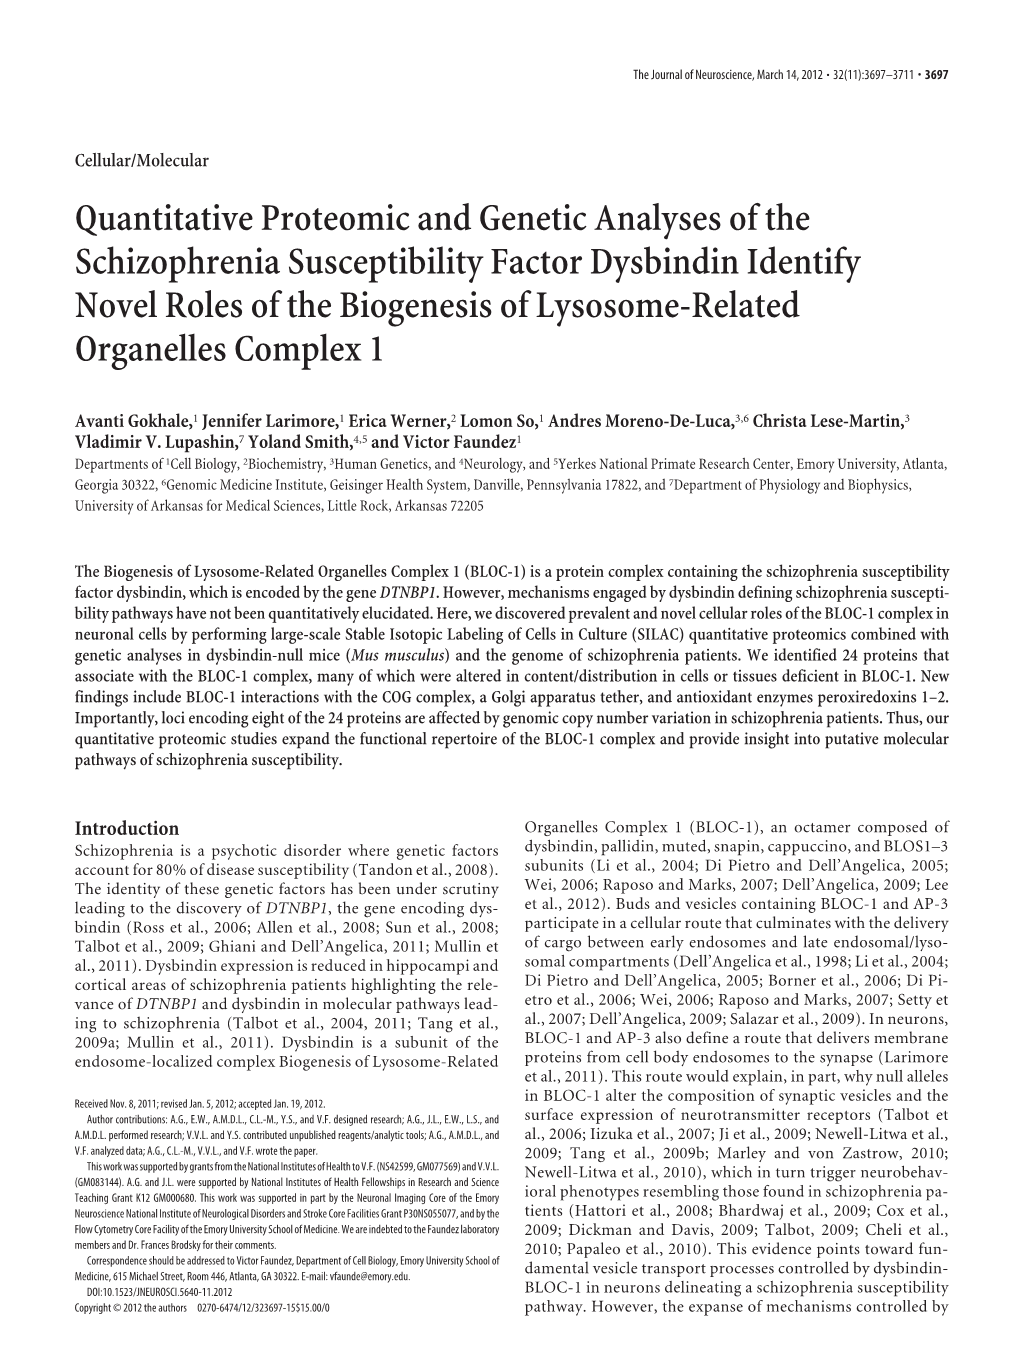 Quantitative Proteomic and Genetic Analyses of the Schizophrenia